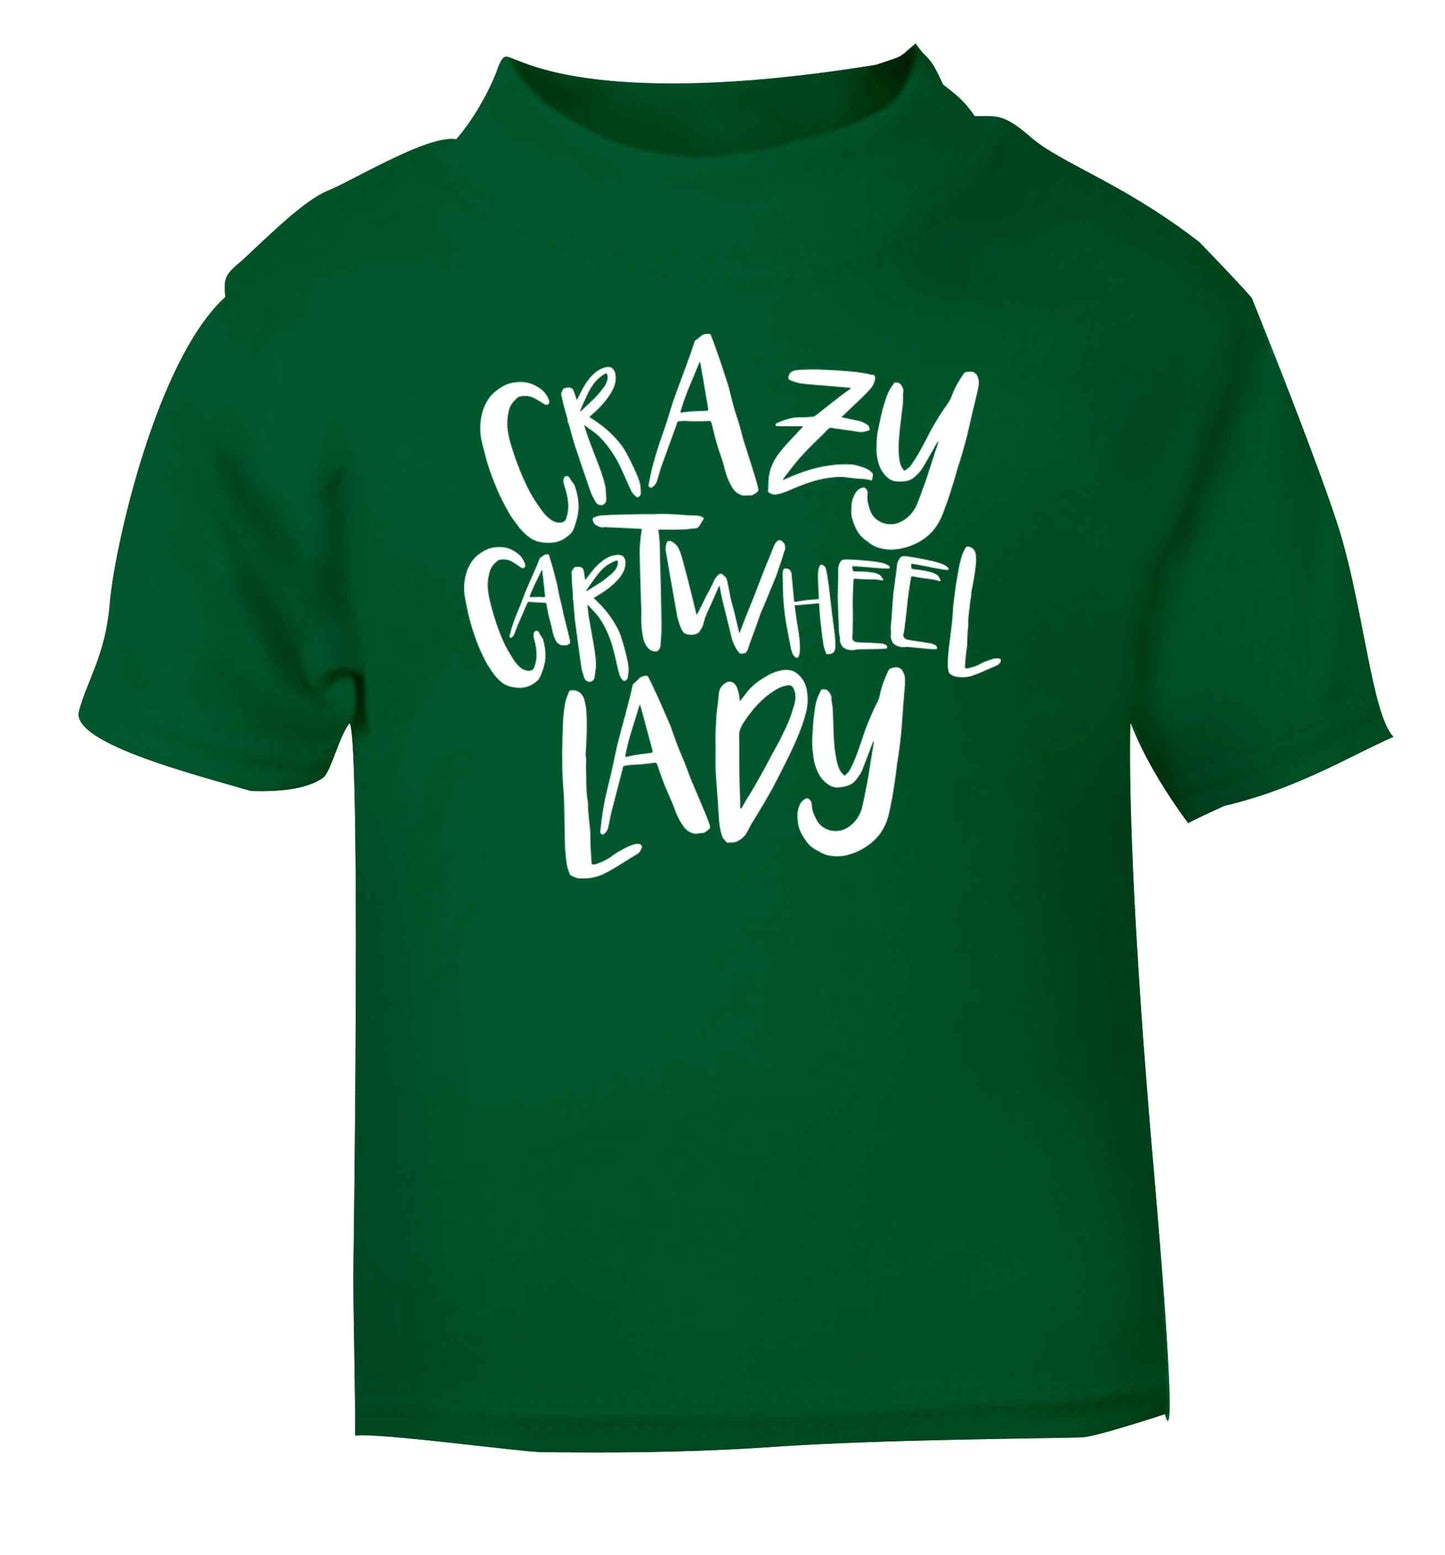 Crazy cartwheel lady green Baby Toddler Tshirt 2 Years